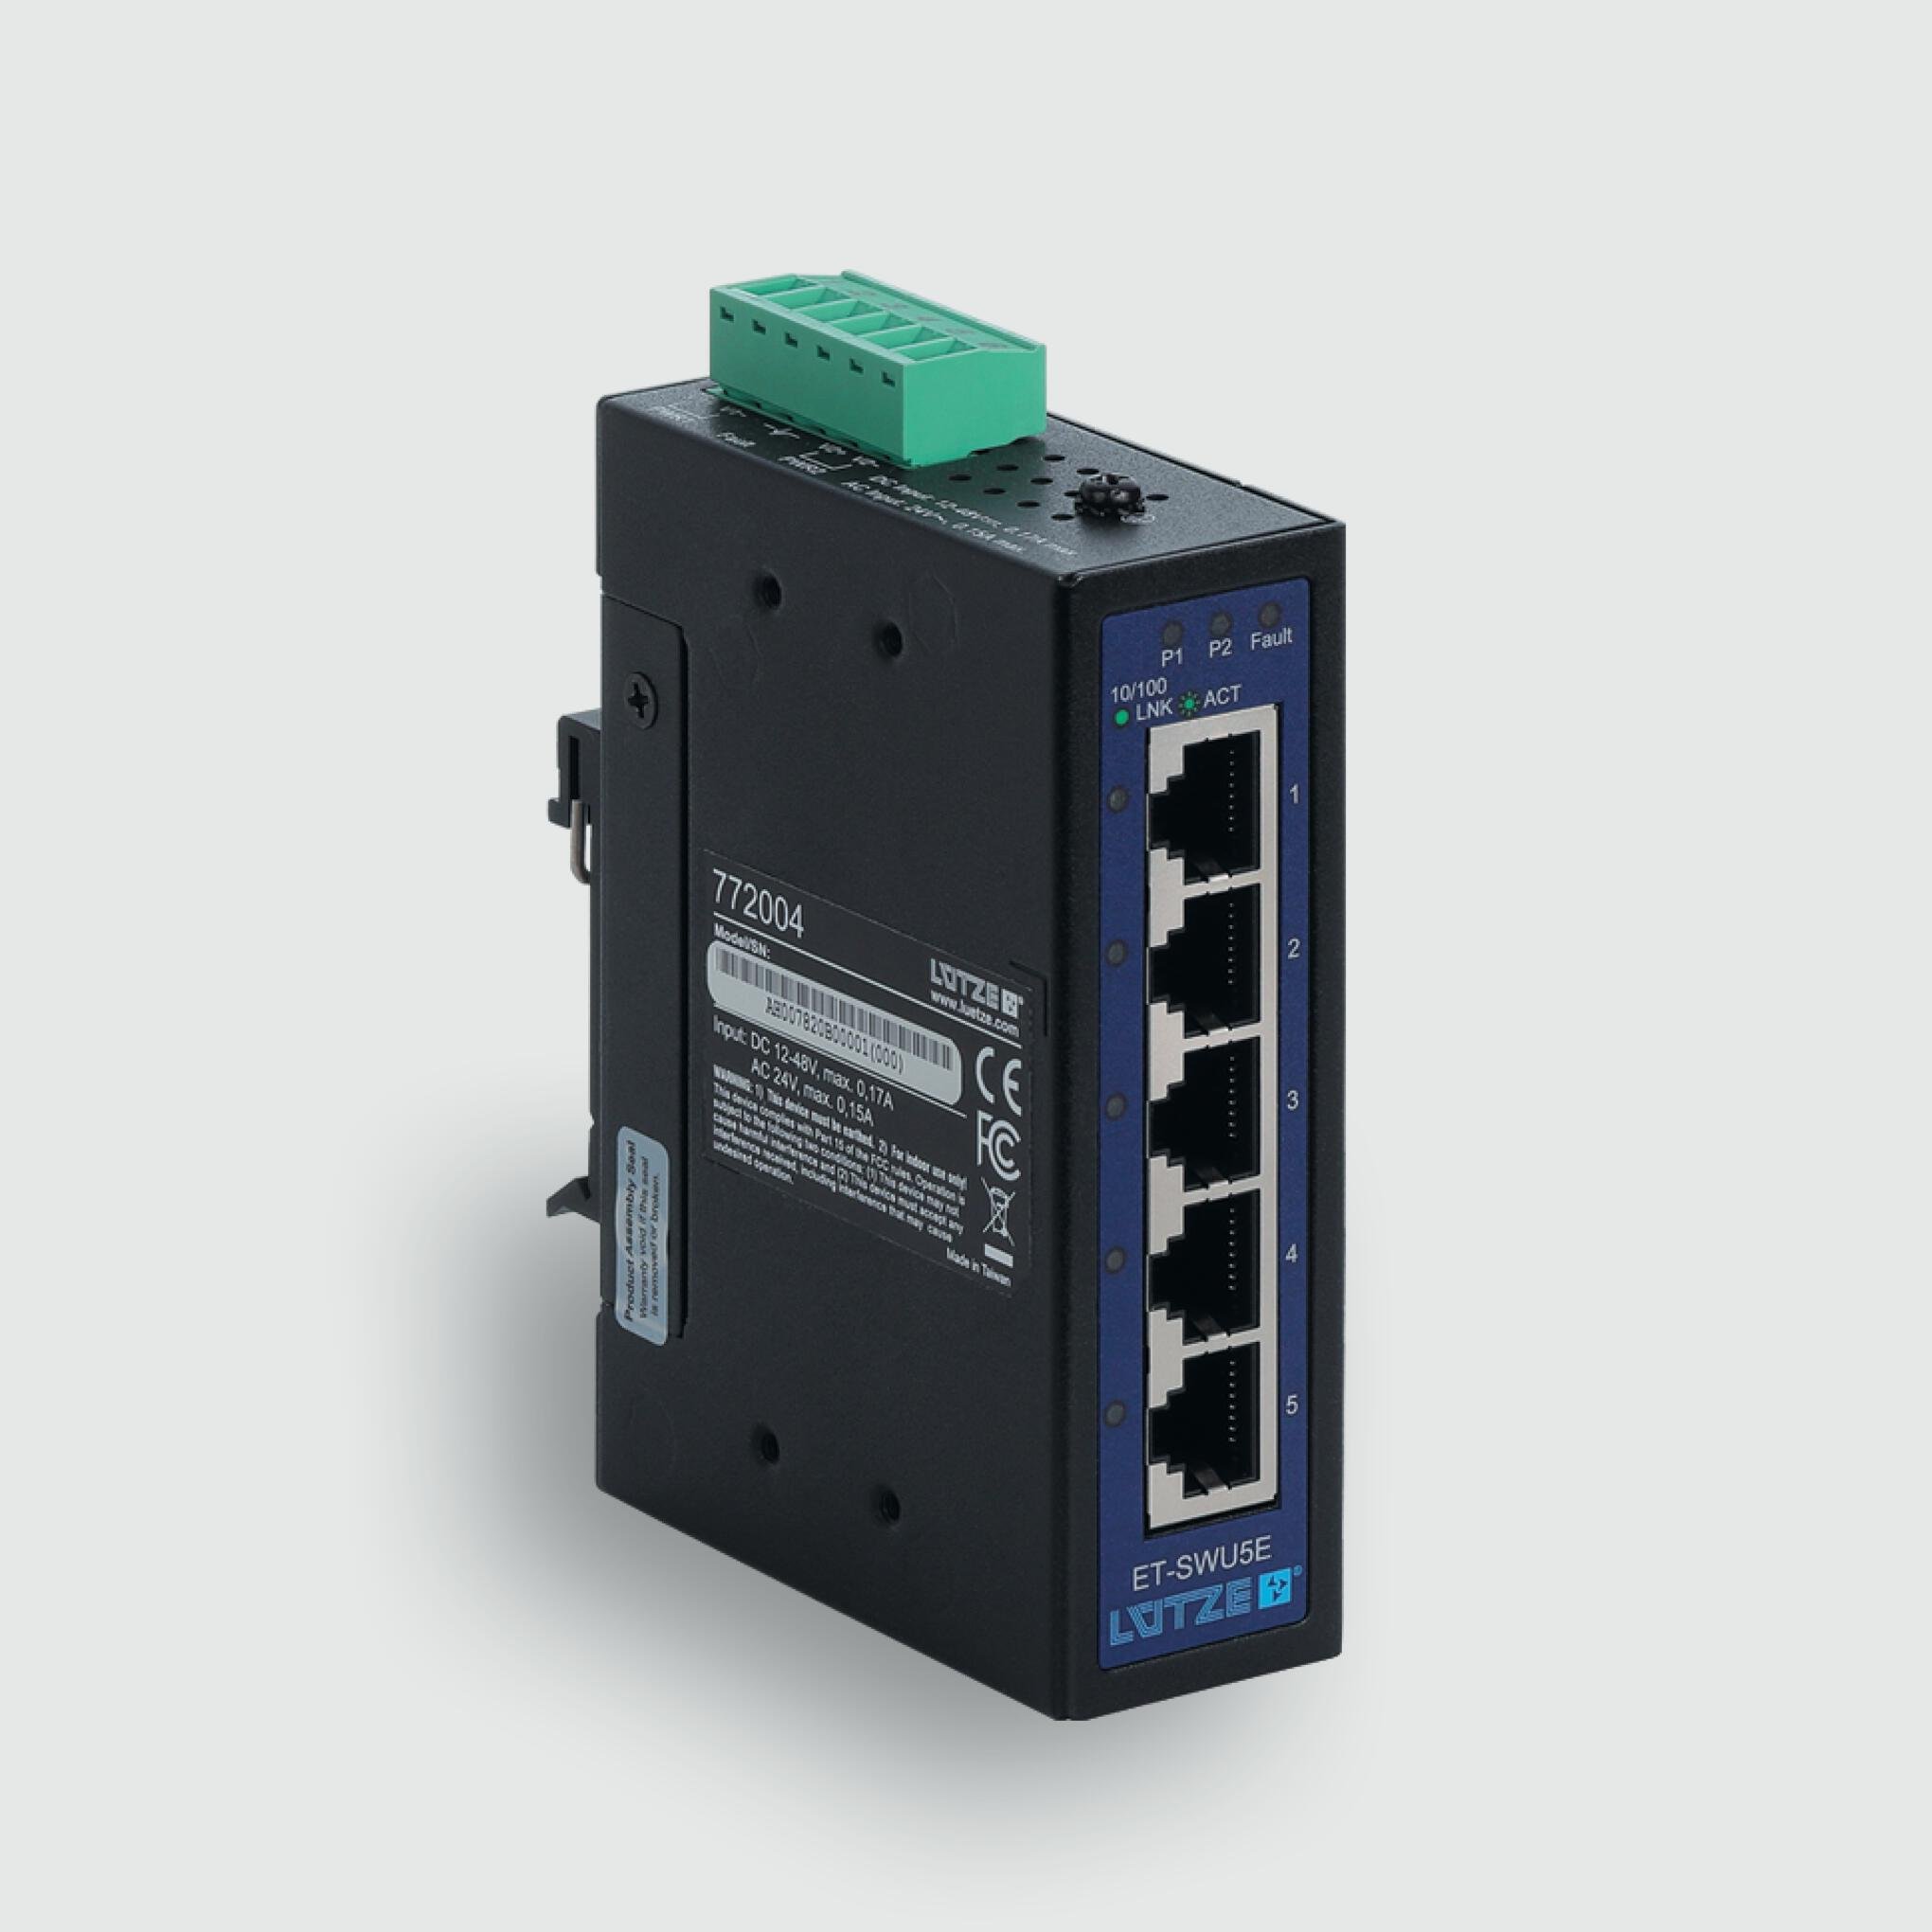 772004 | Lutze | 5 Port Industrial Ethernet Switch